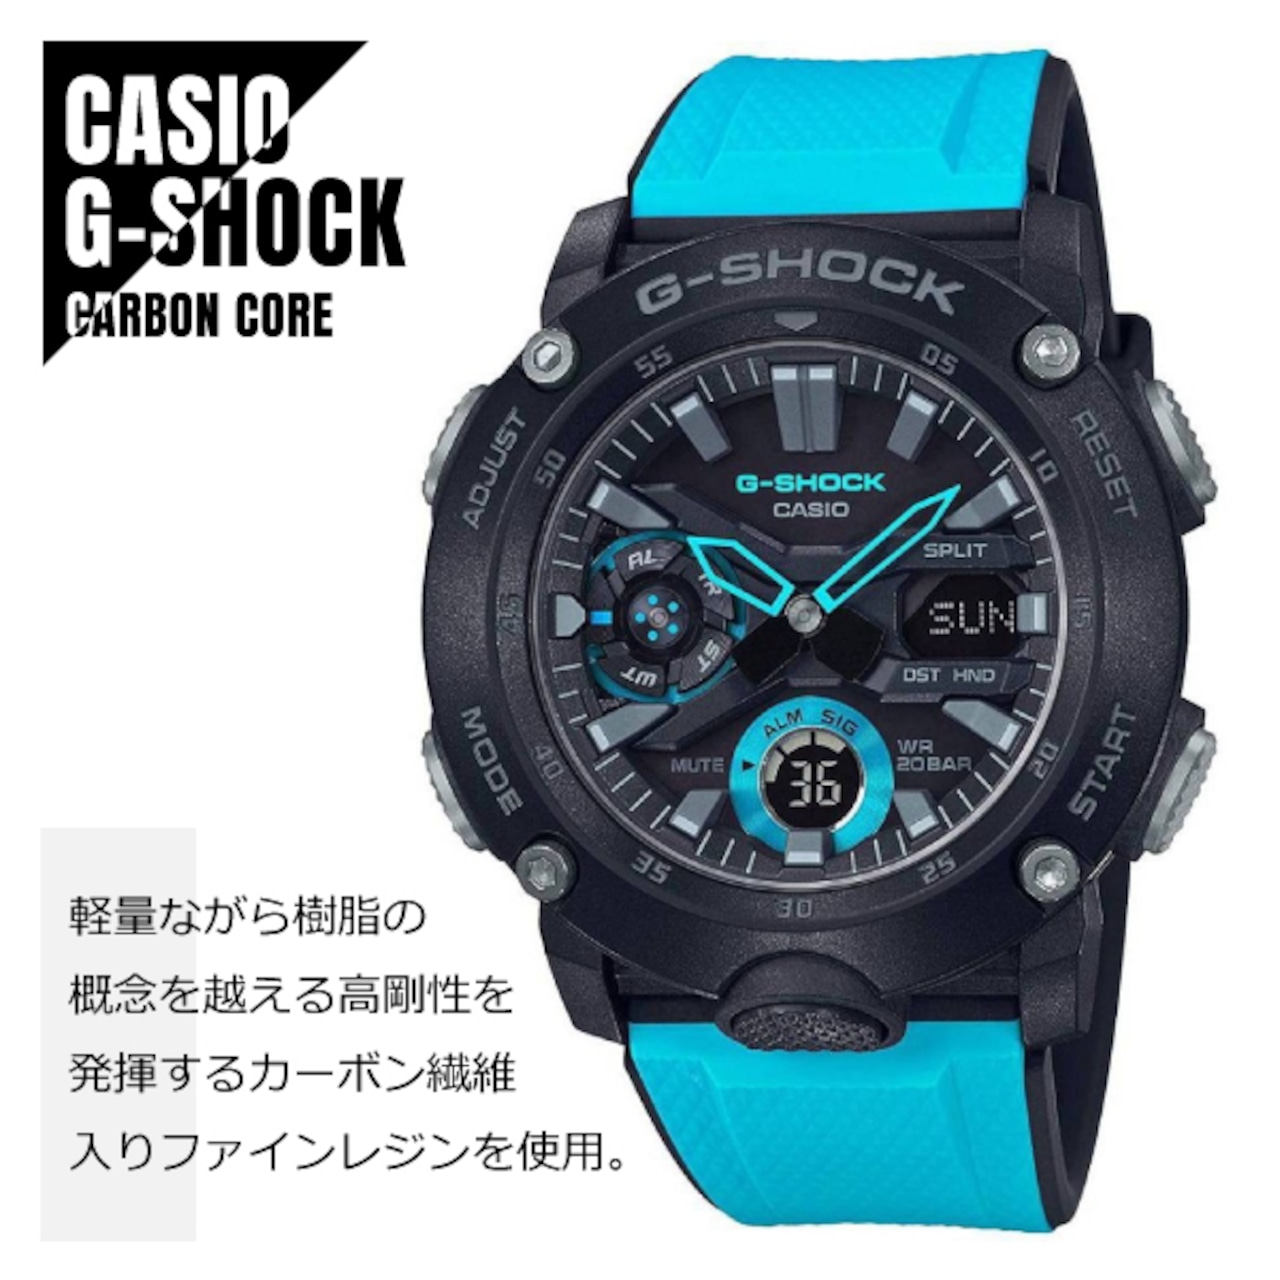 CASIO カシオ G-SHOCK Gショック カーボンコアガード構造 GA-2000-1A2 ブラック×ブルー 腕時計 メンズ